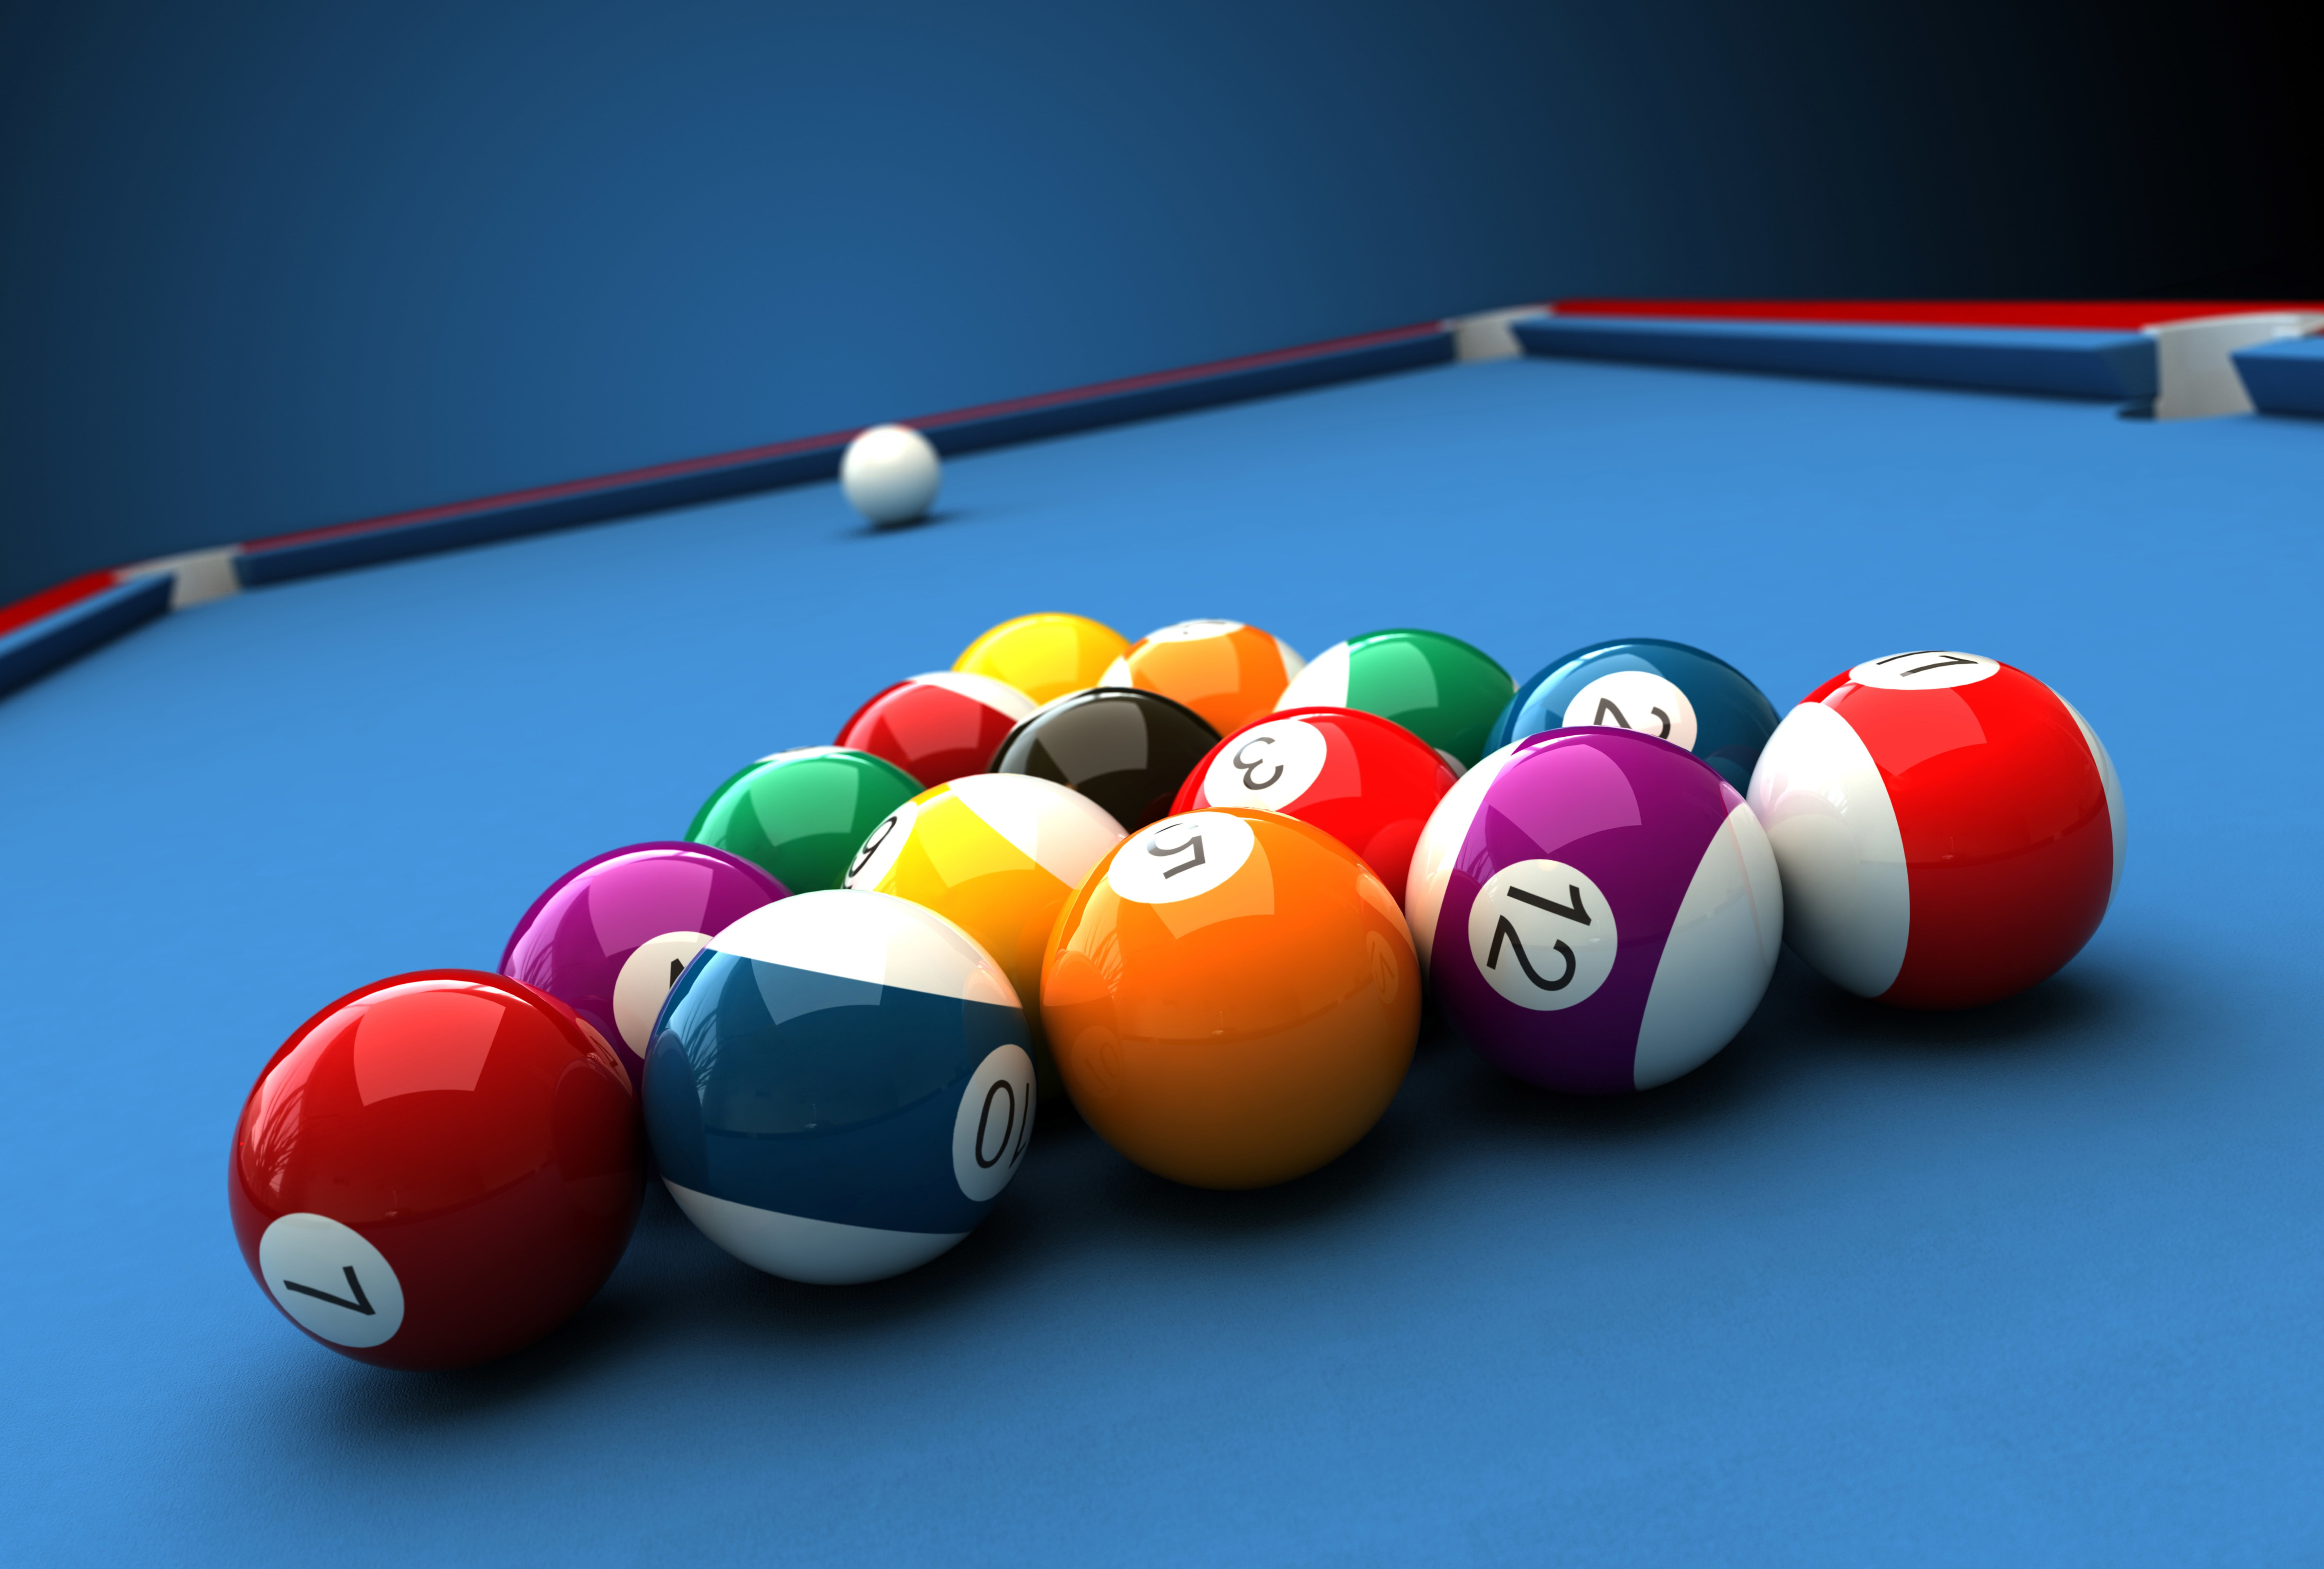 billiard ball set, billiard balls, pool table, ball, colorful